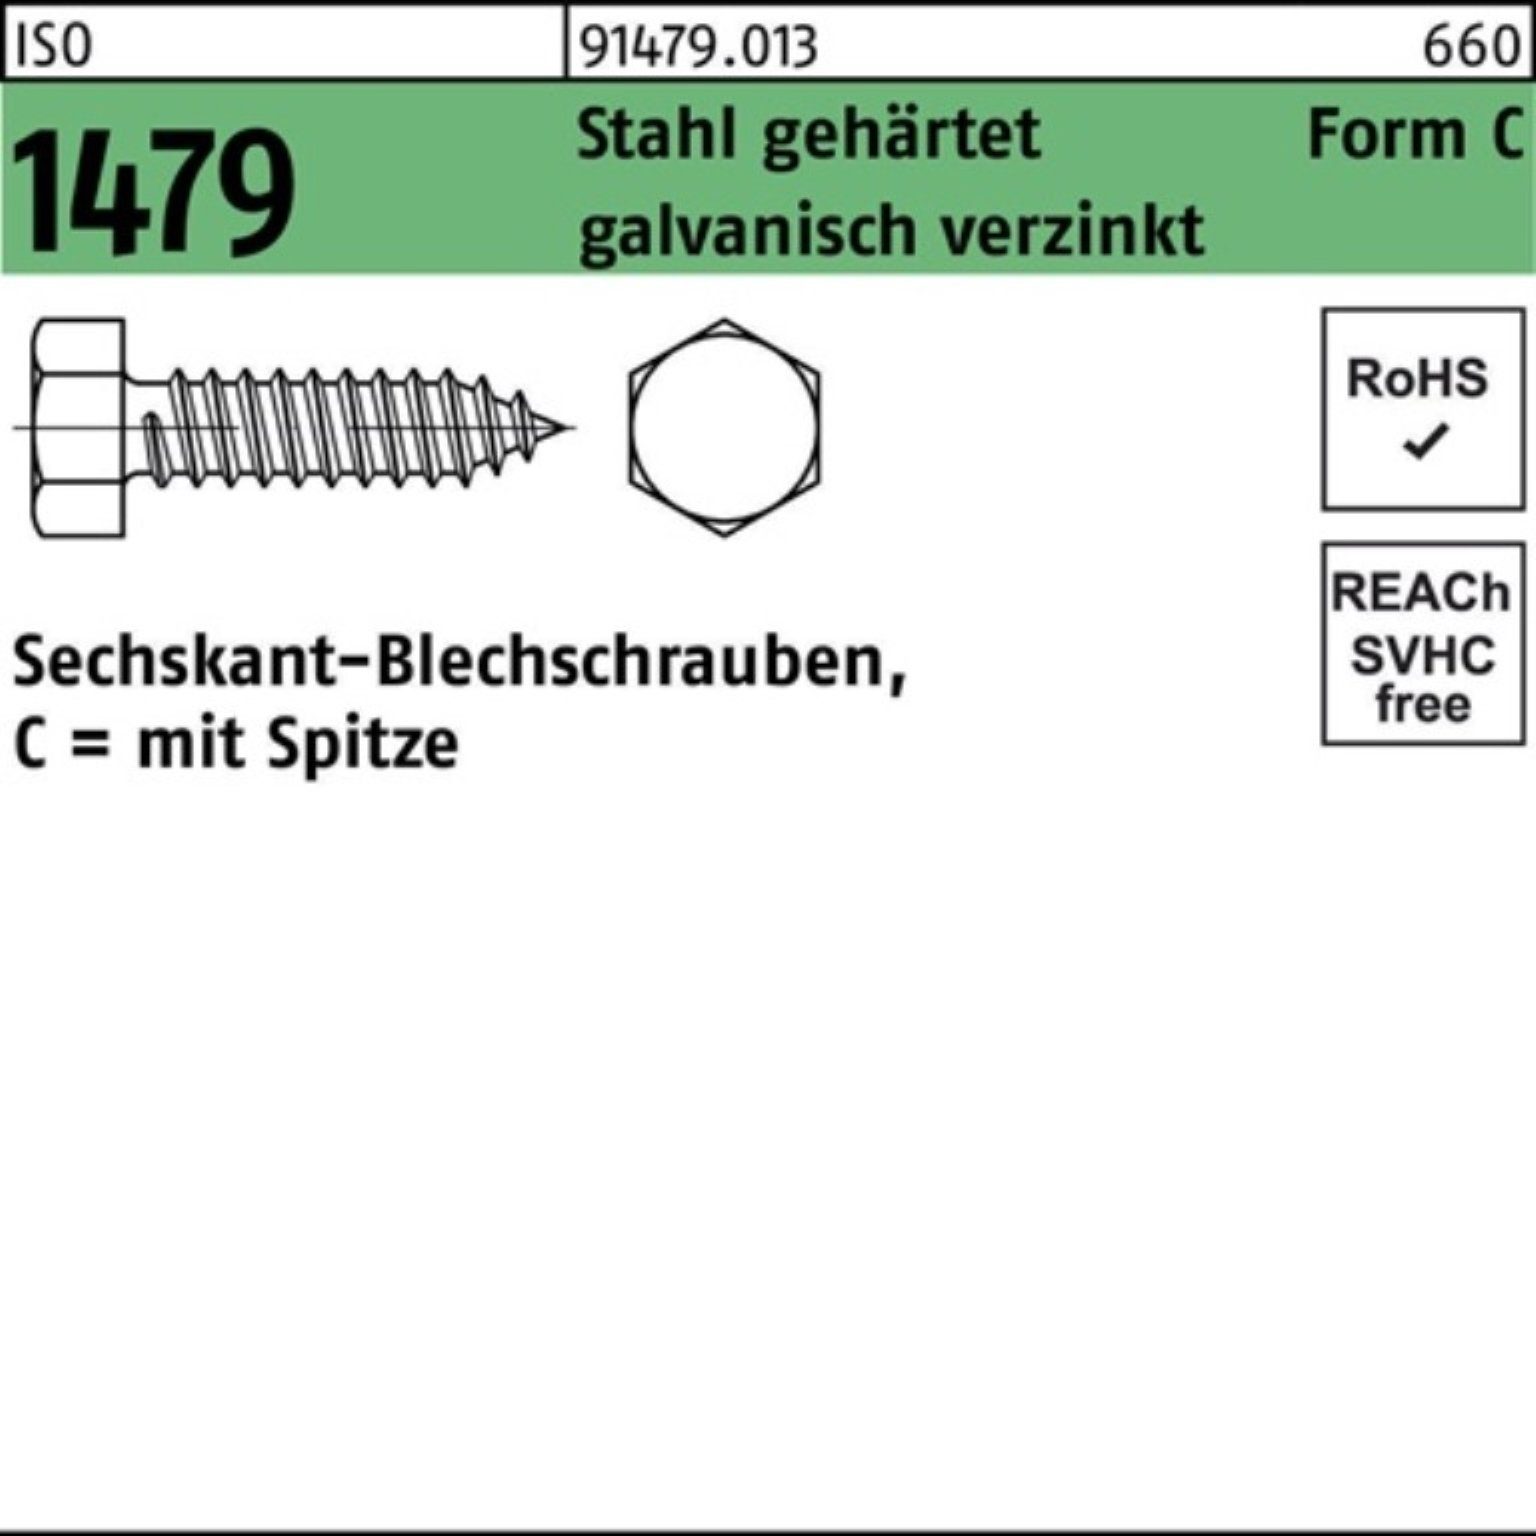 Spitze/6-kt Blechschraube 1479 5,5x45 Blechschraube Stahl Pack C Reyher ISO gehärtet 250er